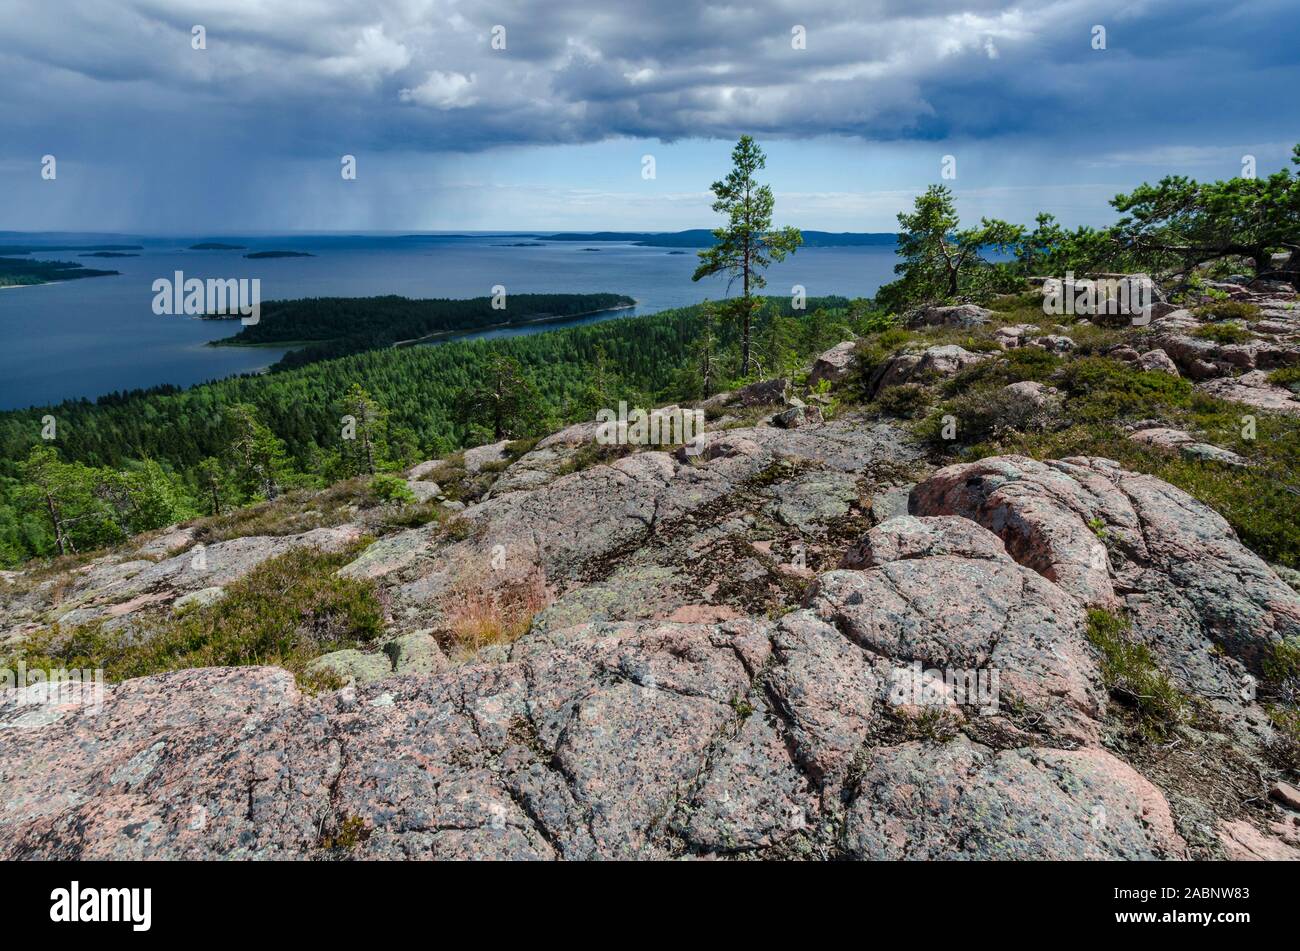 Regenschauer ueber dem Bottnischen Meerbusen, Skuleskogen Nationalpark, Weltnaturerbe Hoega Kusten, Vaesternorrland, Schweden, Juli 2012 Foto Stock